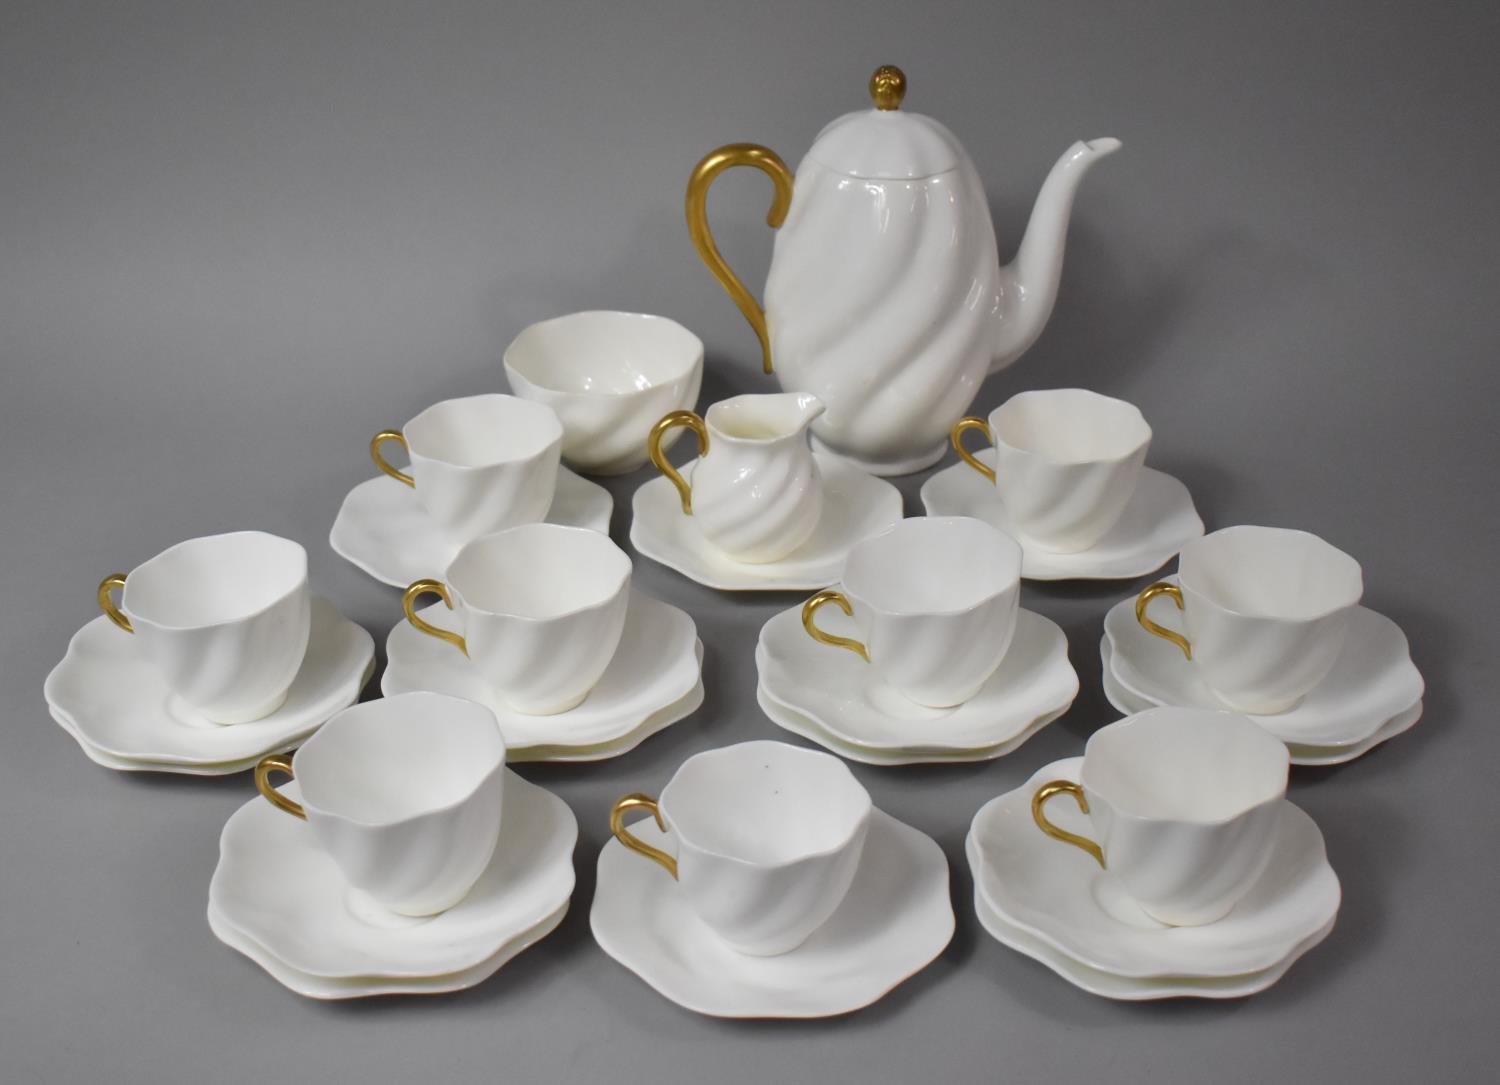 A Coalport White and Gilt Decorated Tea Set to comprise Nine Cups, Six Saucers, Ten Side Plates, Tea